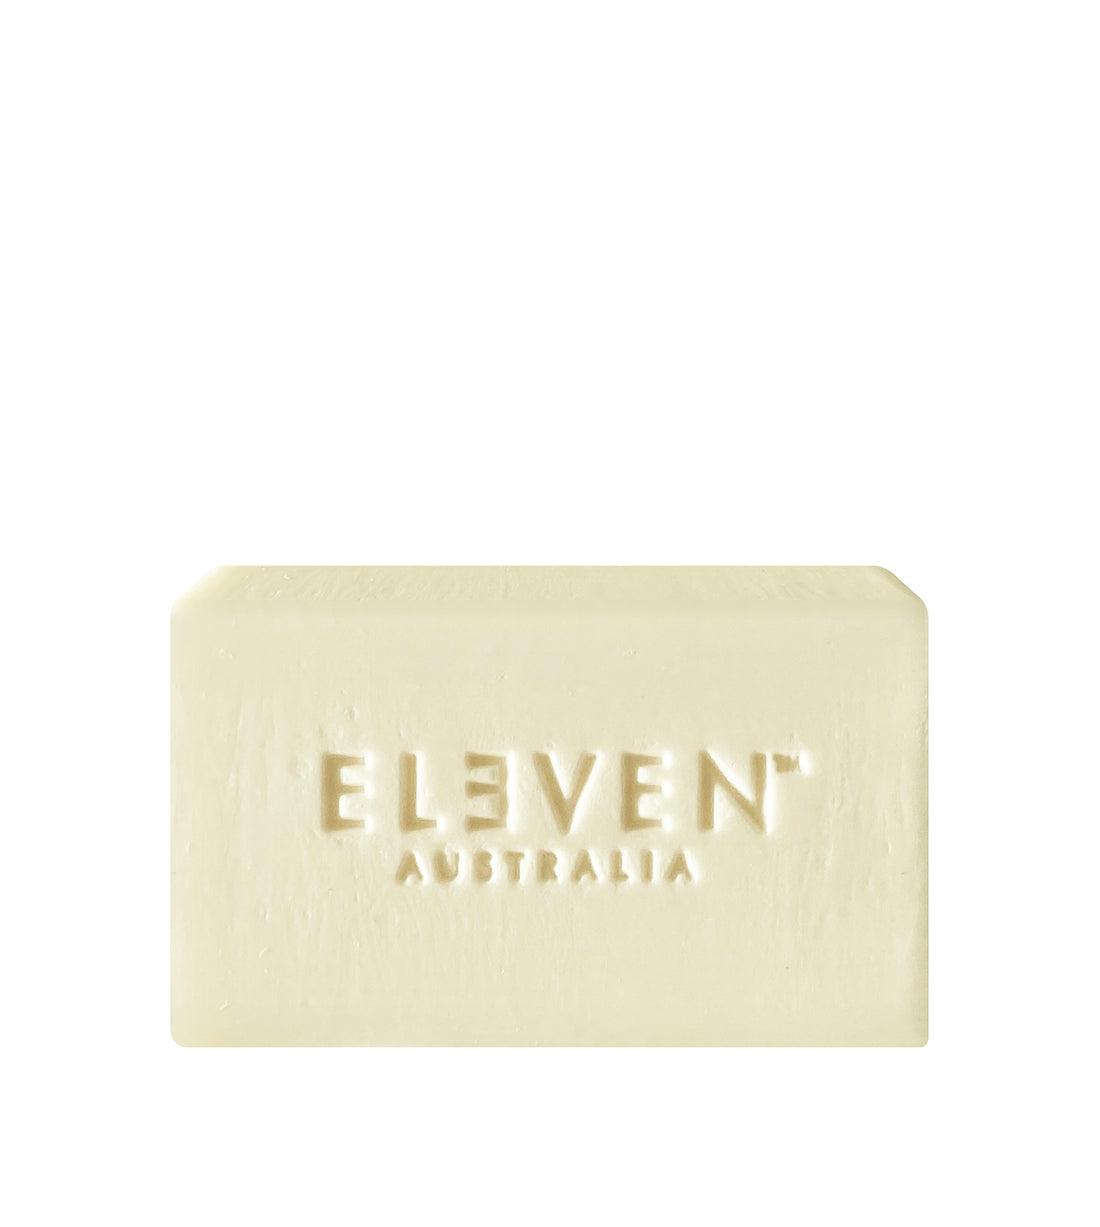 ELEVEN Australia Gentle Cleanse Shampoo Bar